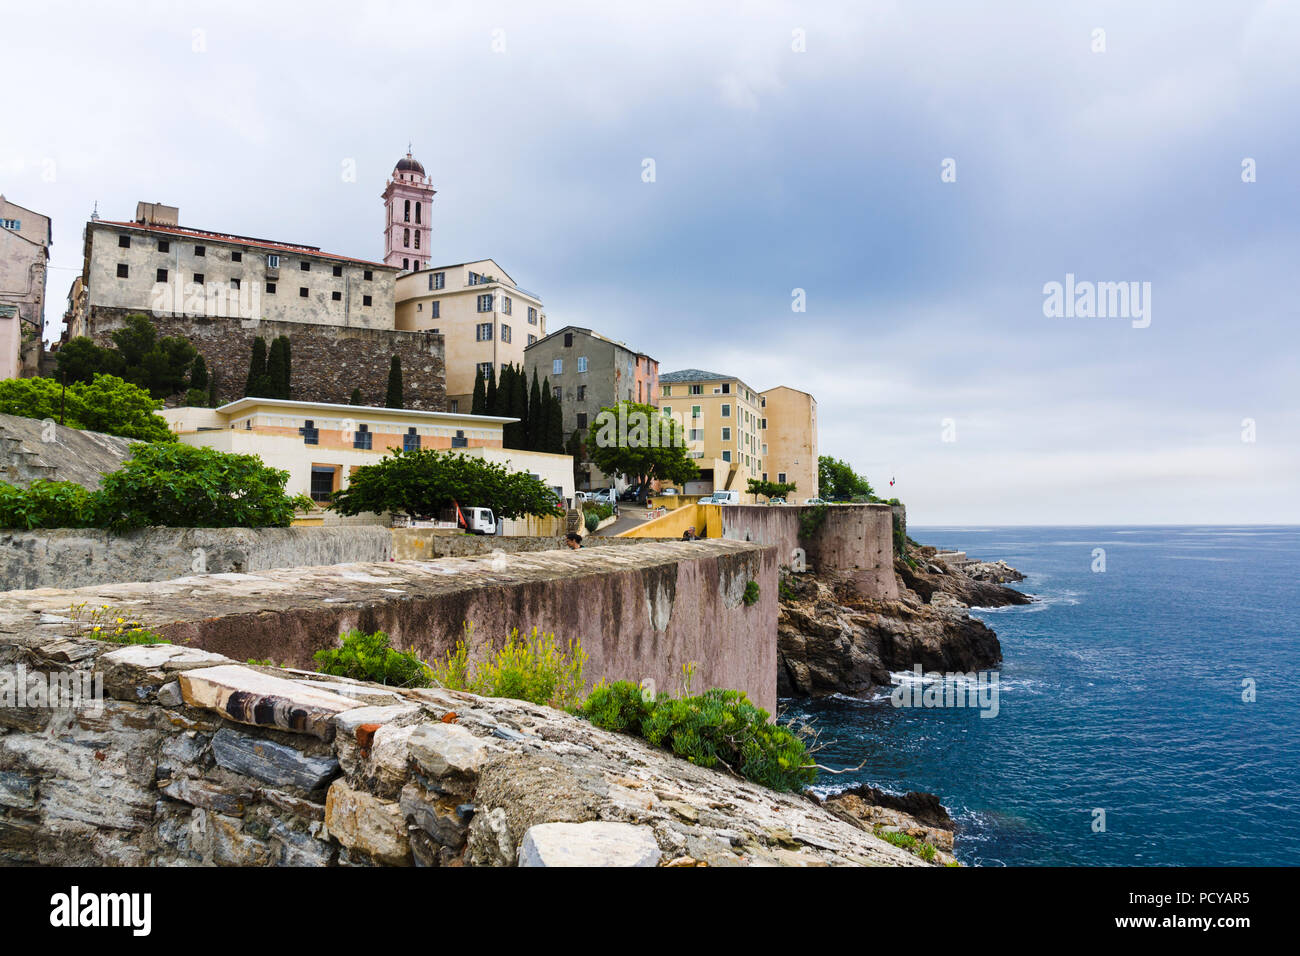 The citadel - Office de Tourisme de Bastia